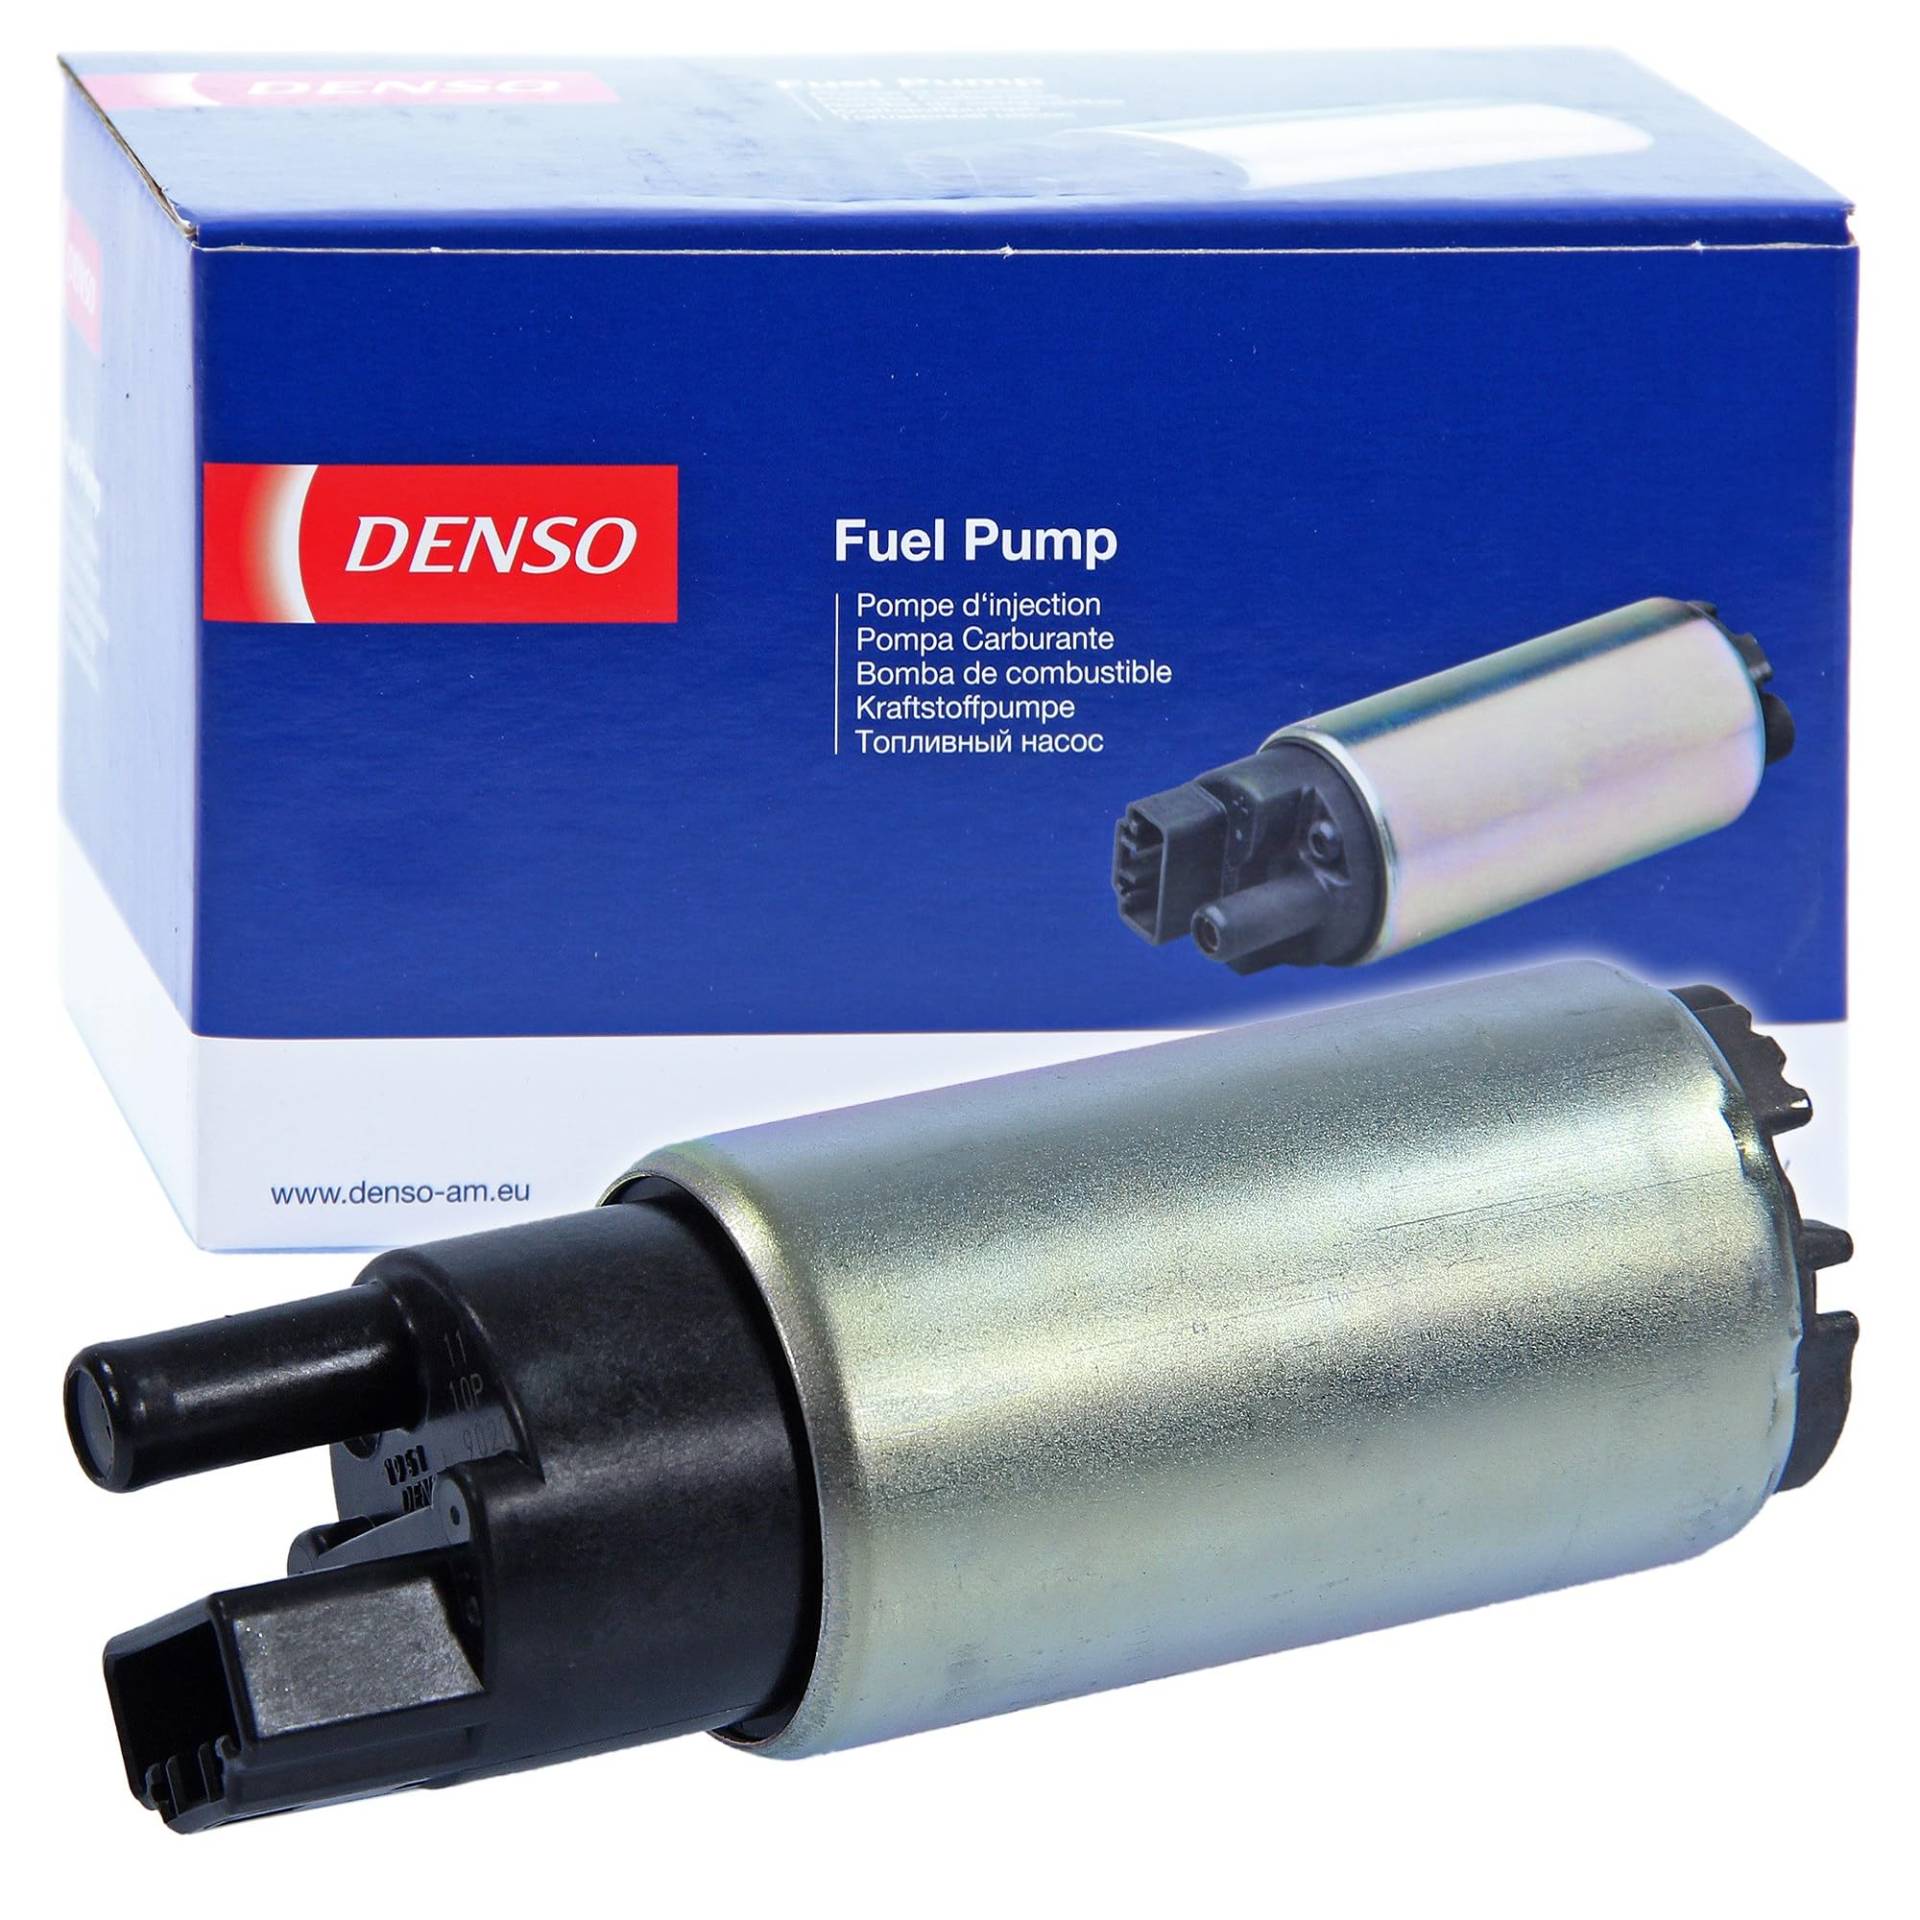 DENSO DFP-0103 Kraftstoffpumpe von Denso